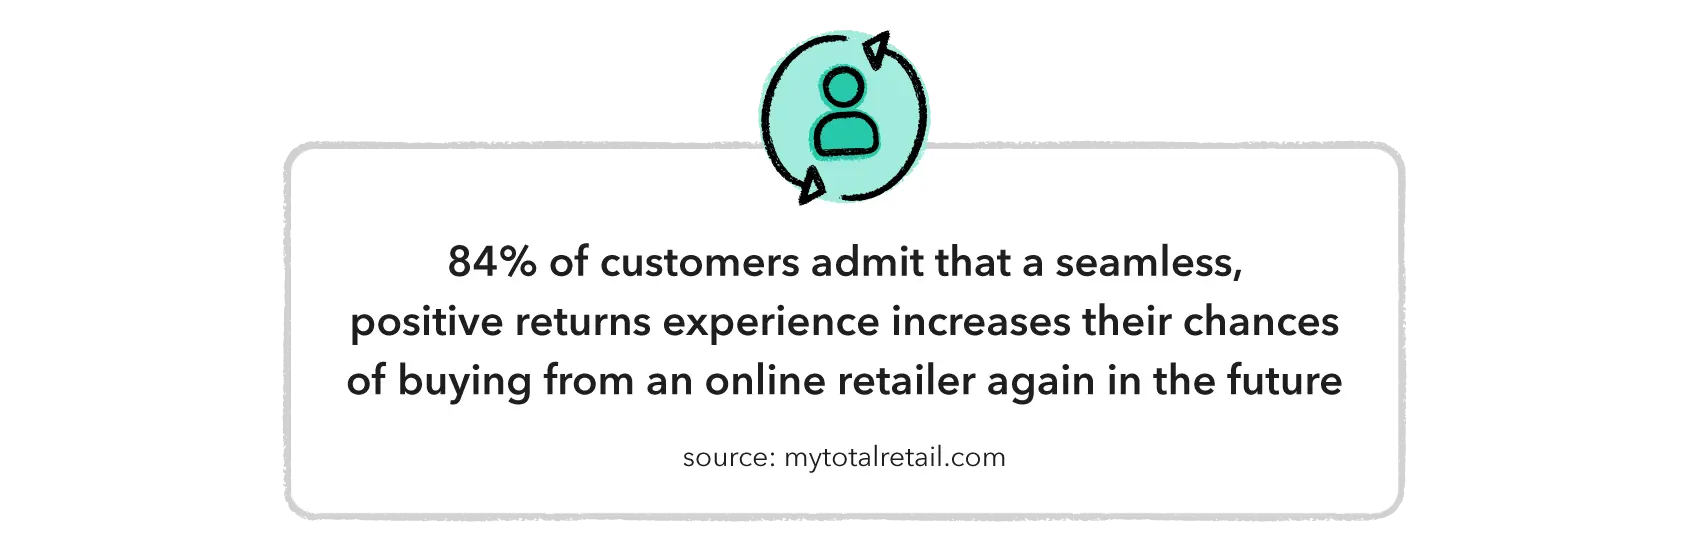 positive returns experiences contribute to customer retention